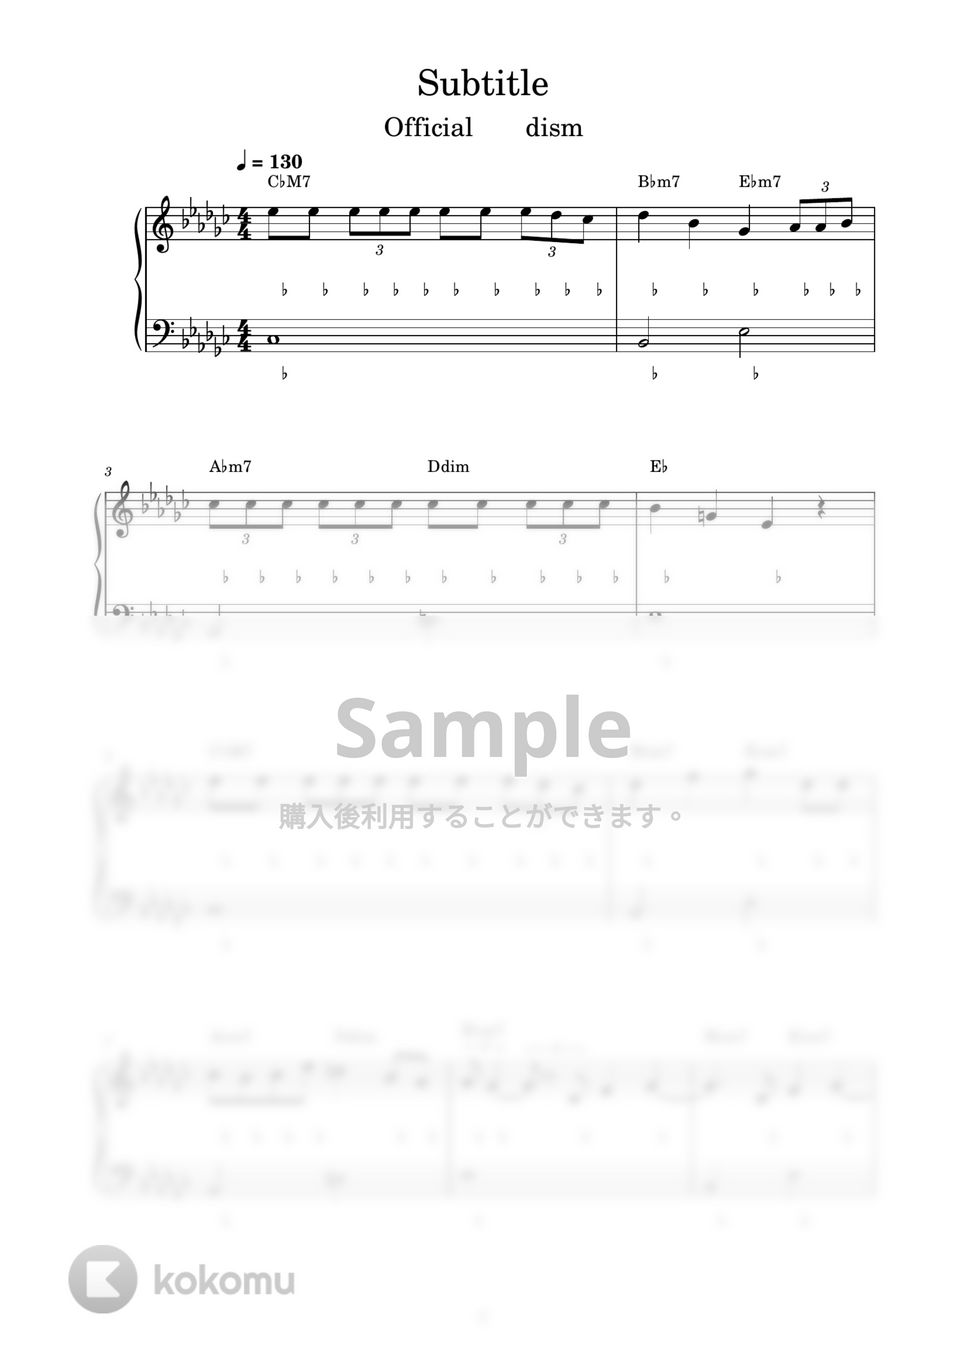 Official髭男dism - Subtitle (ピアノ楽譜 / かんたん両手 / 歌詞付き / ドレミ付き / 初心者向き) by piano.tokyo